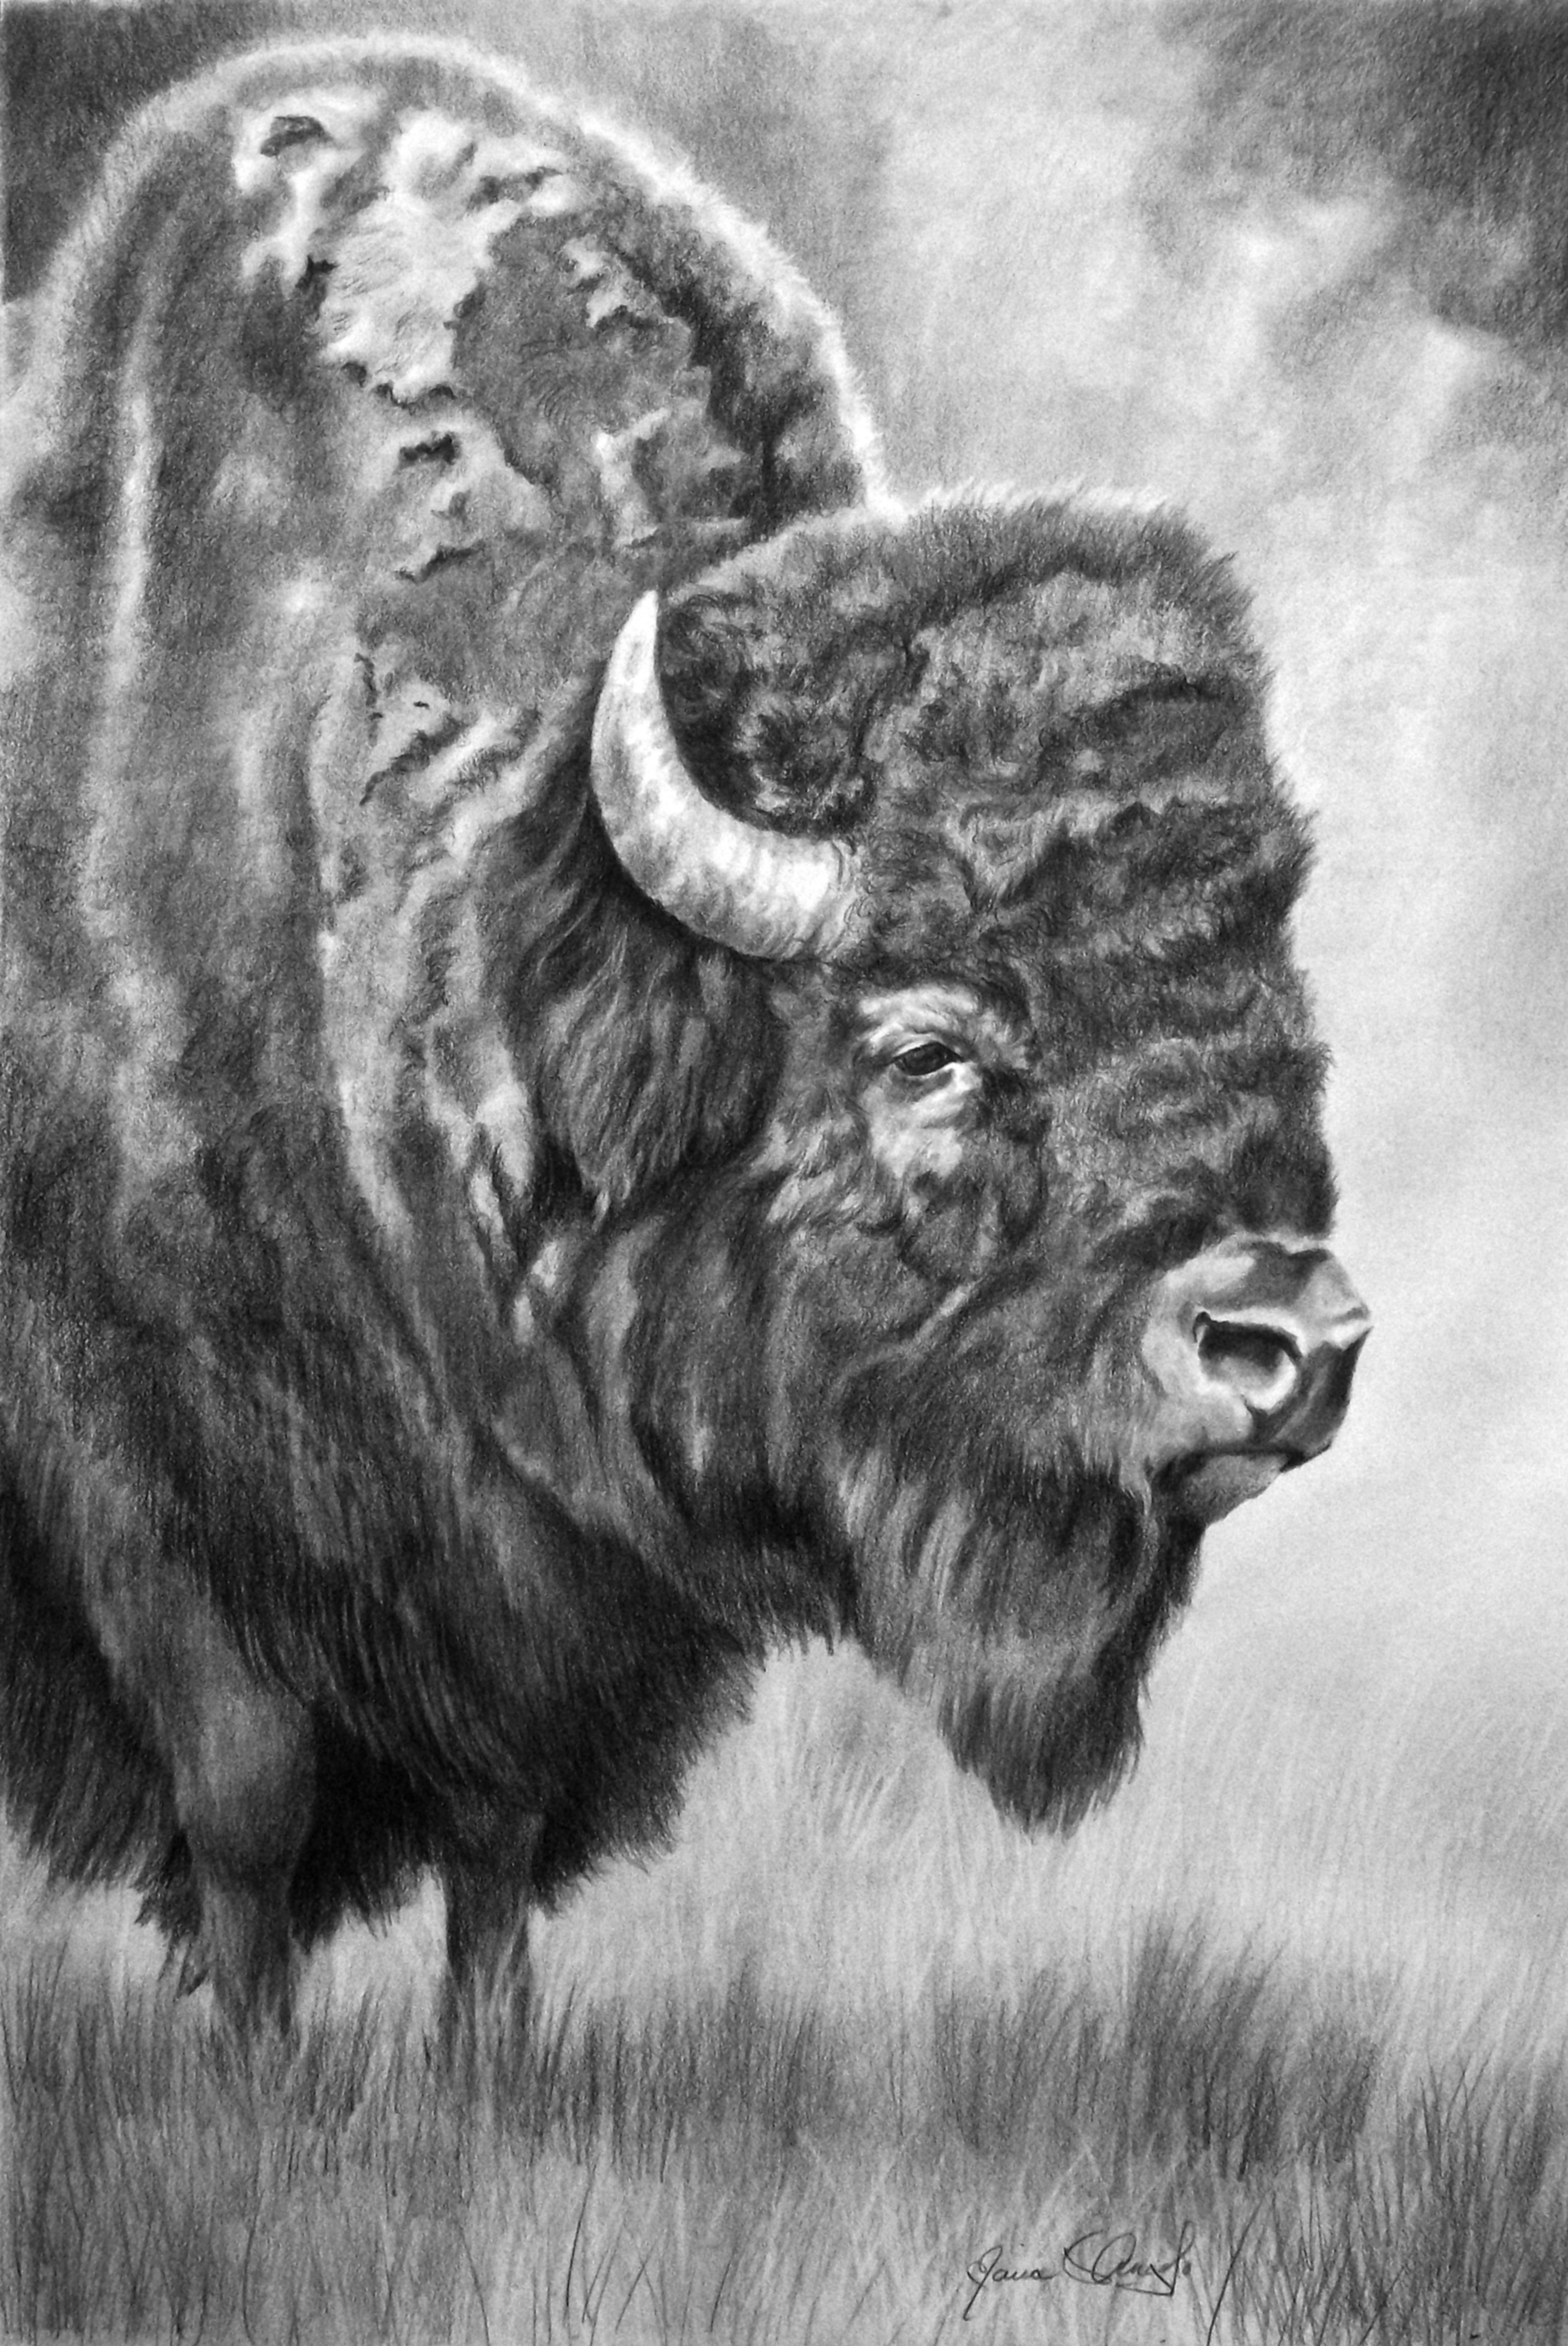 numu kutsuu - sacred buffalo